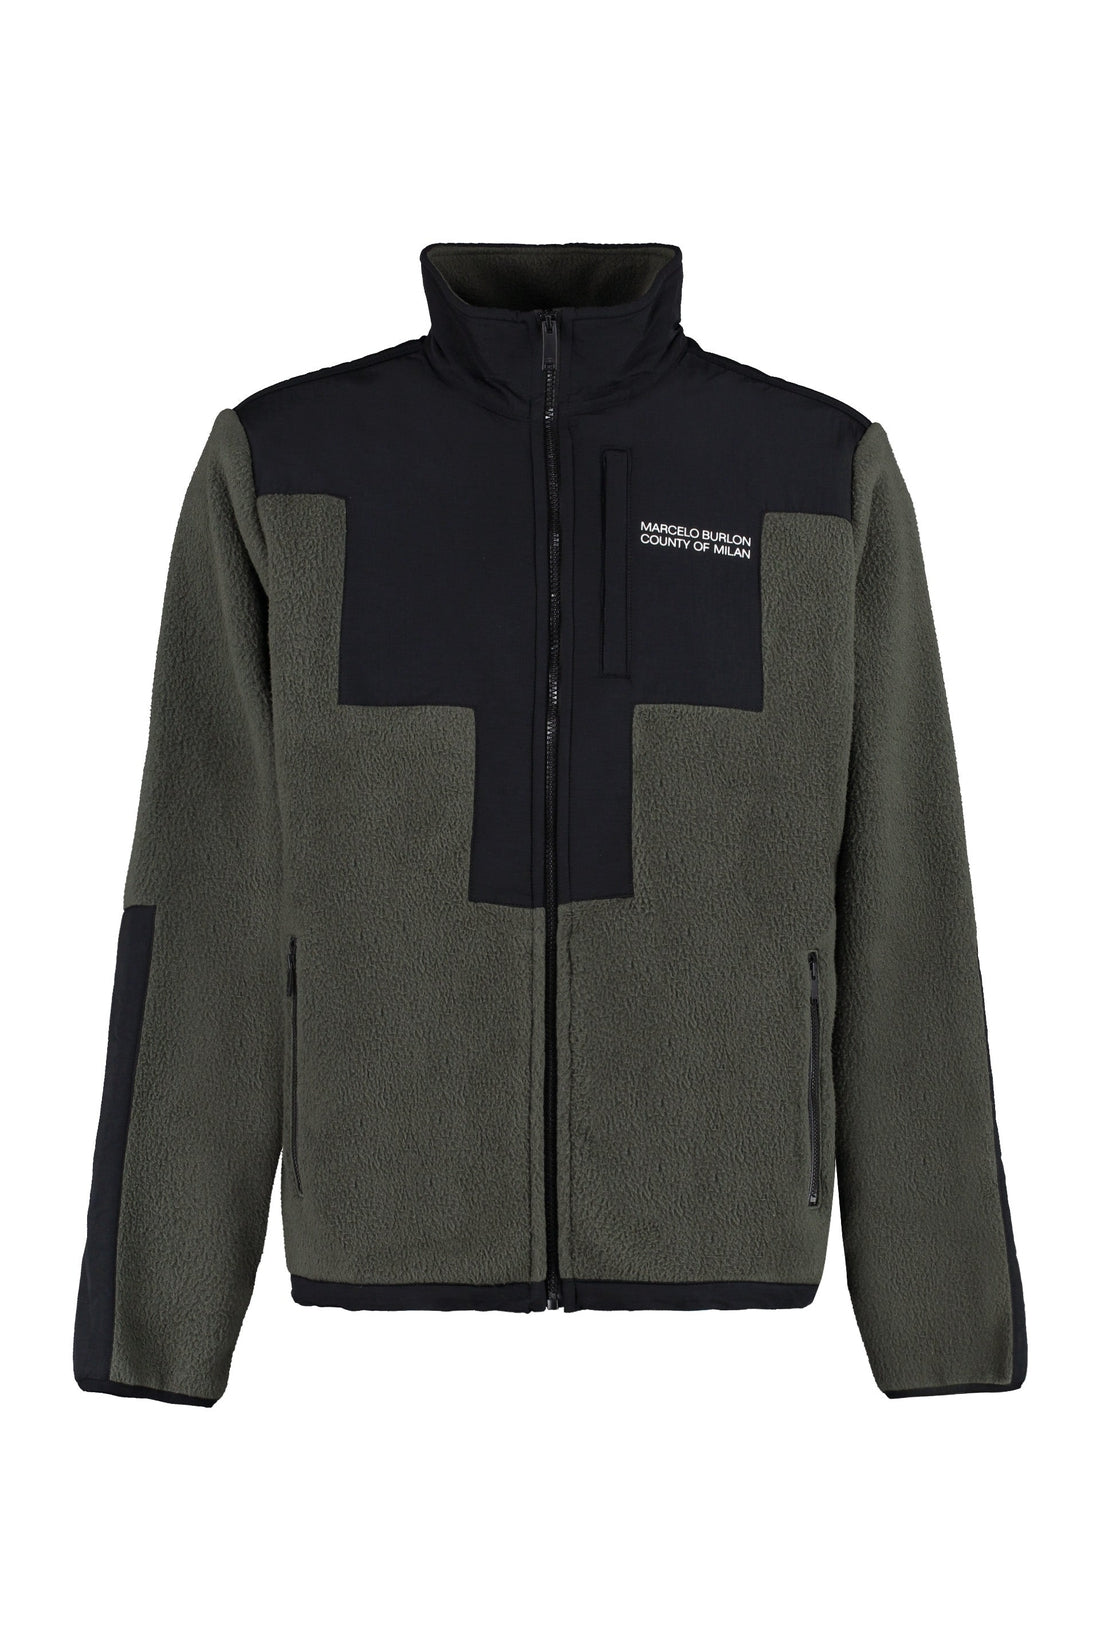 Marcelo Burlon County of Milan-OUTLET-SALE-Fleece jacket-ARCHIVIST